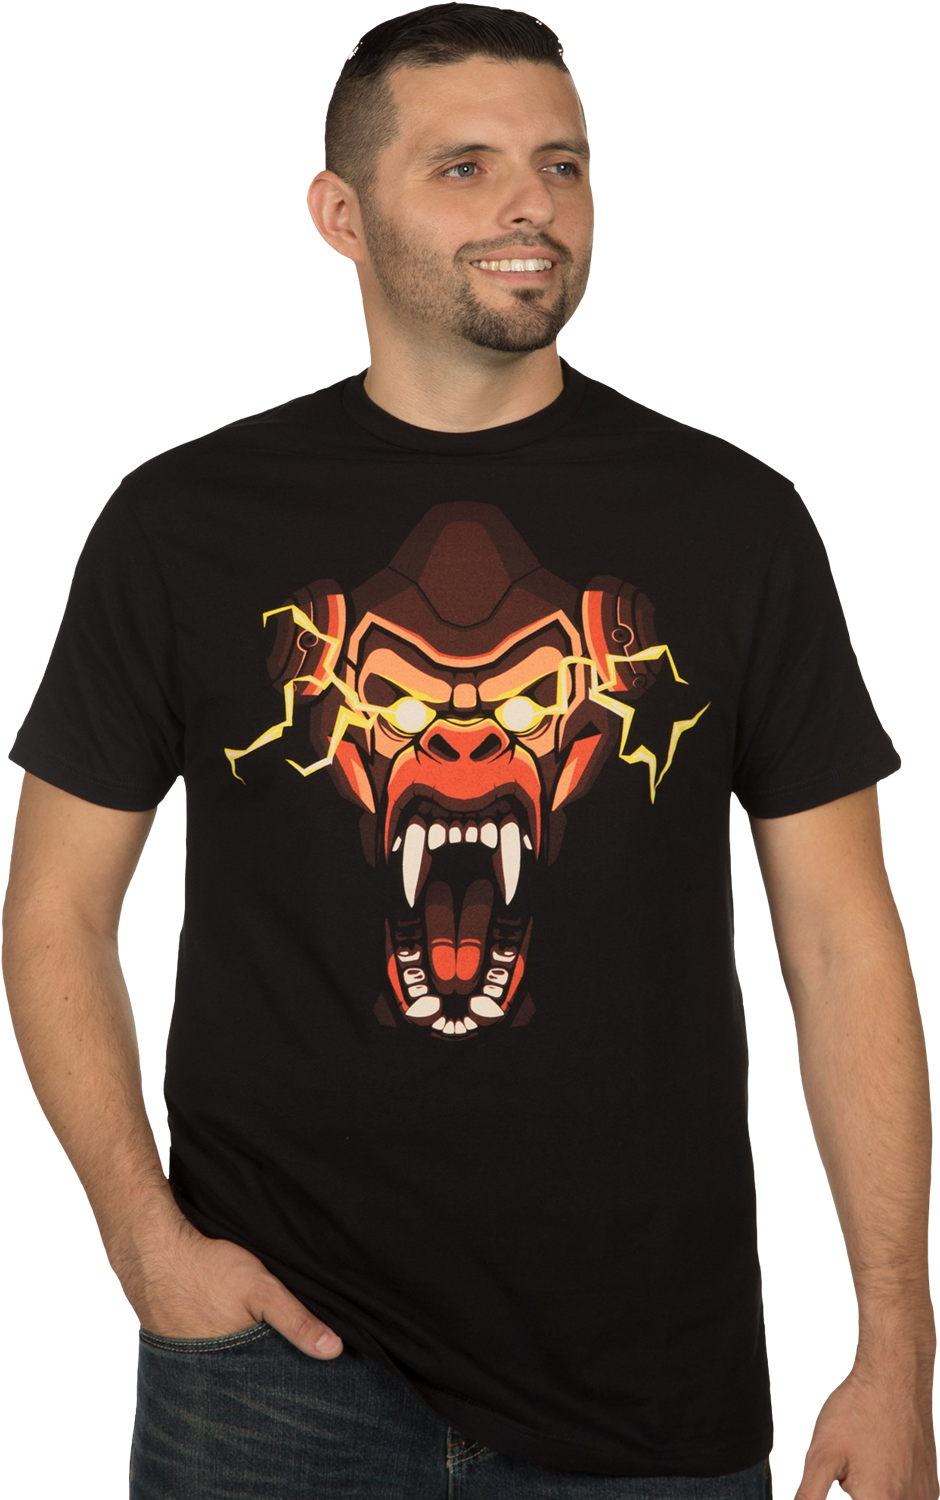 Man Wearing Fierce Monster Graphic Tee PNG image